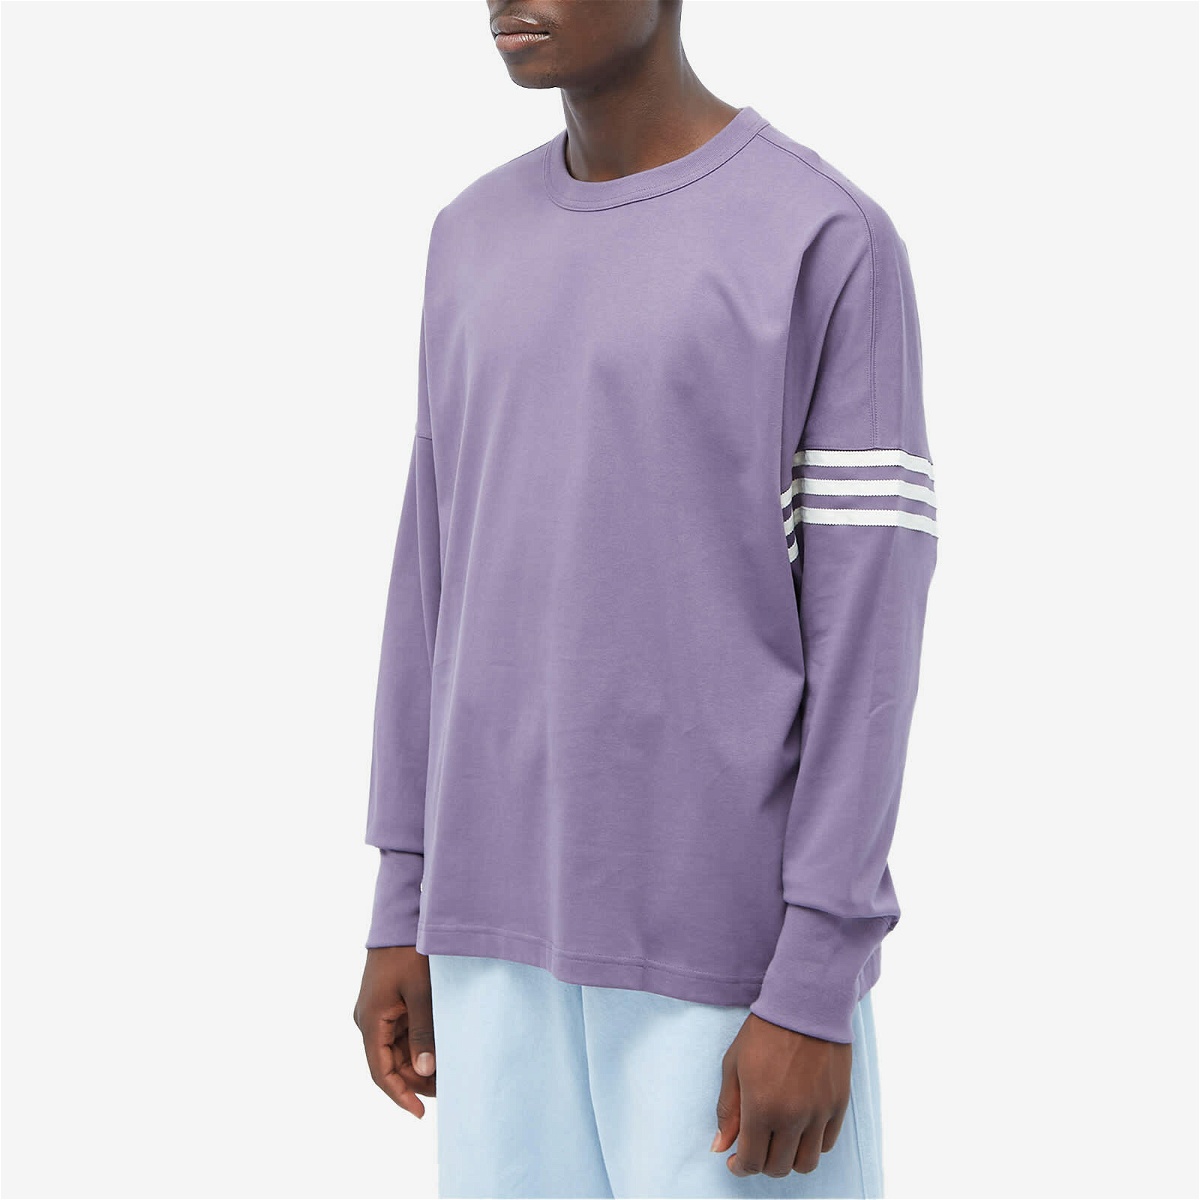 Adidas Men\'s Long Sleeve Shadow Violet in Neuclassics T-Shirt adidas